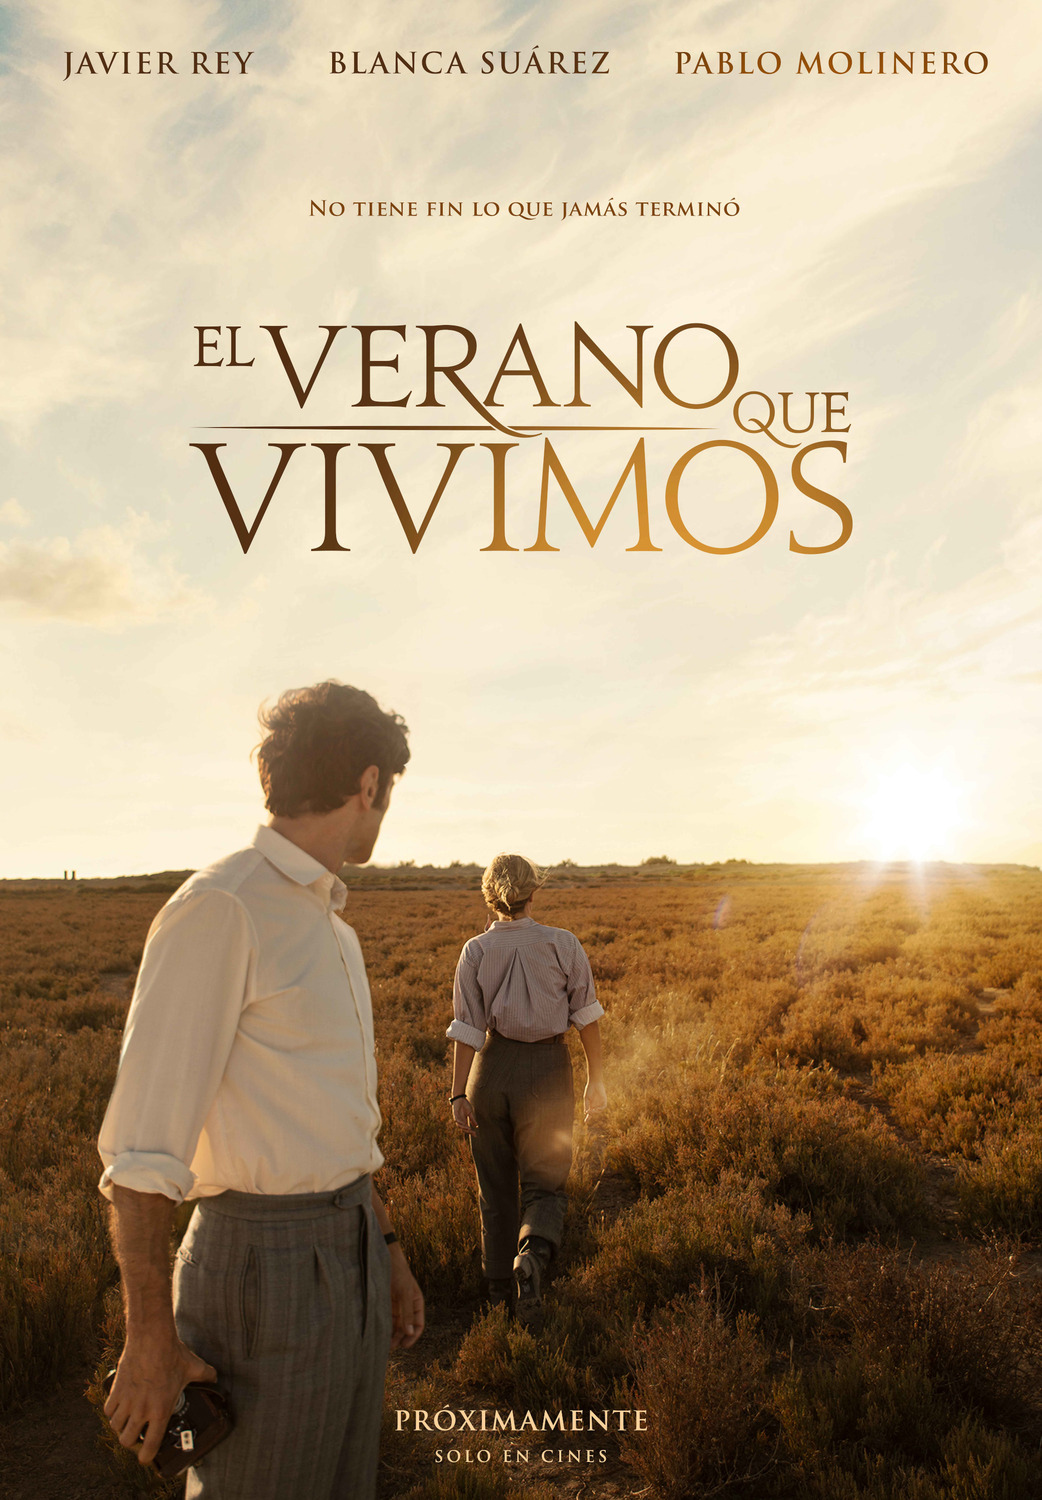 Extra Large Movie Poster Image for El verano que vivimos (#1 of 2)